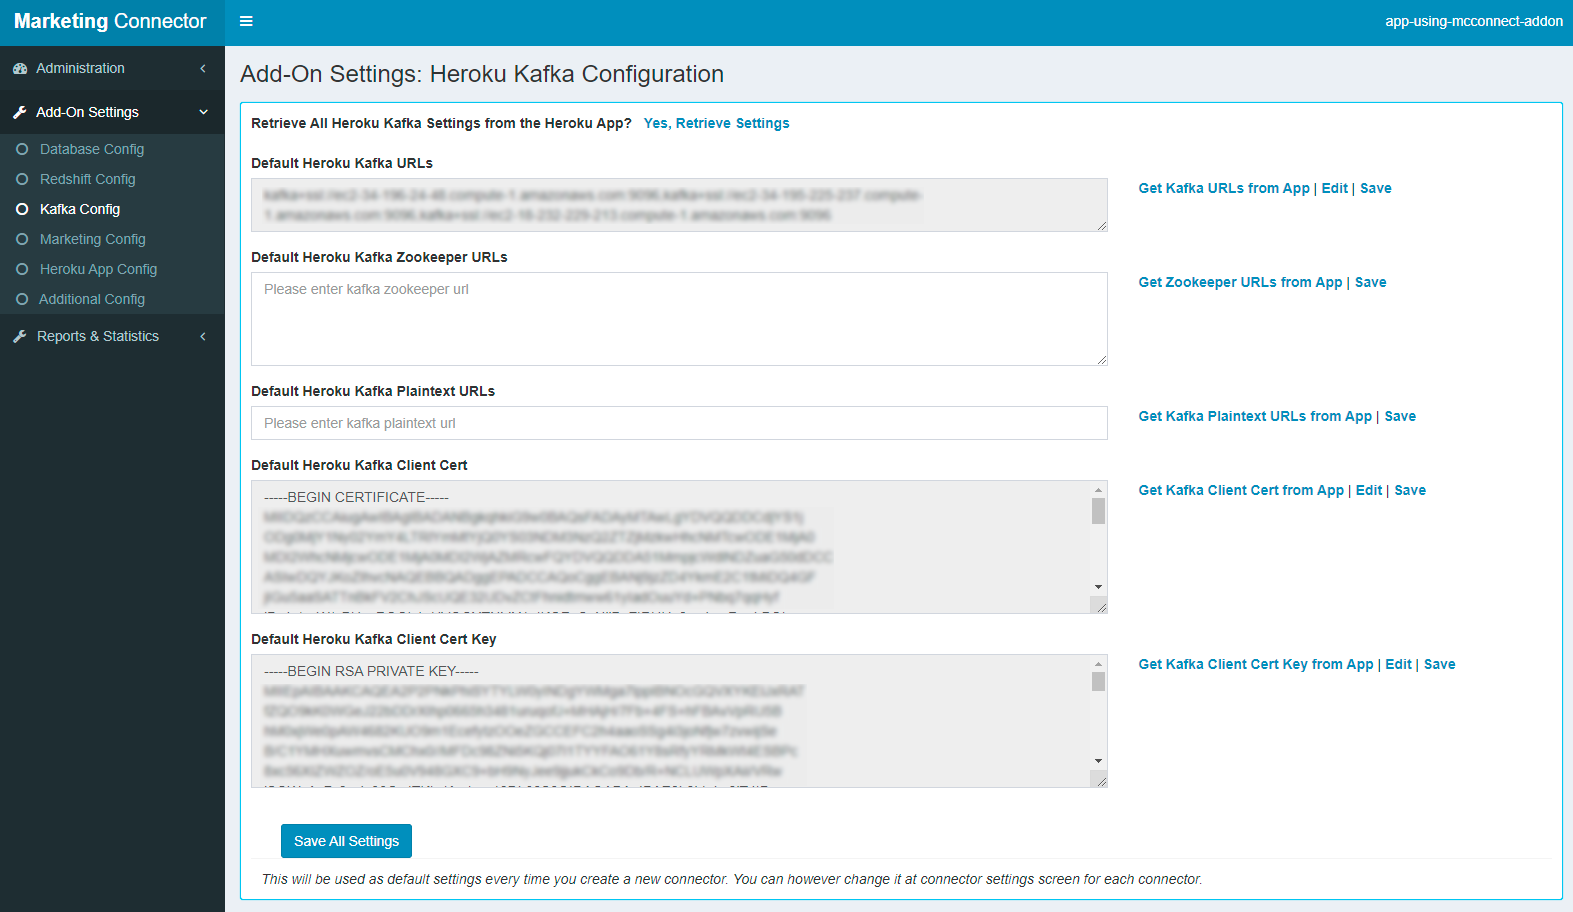 A screenshot showing detected Apache Kafka on Heroku URLs and related information.